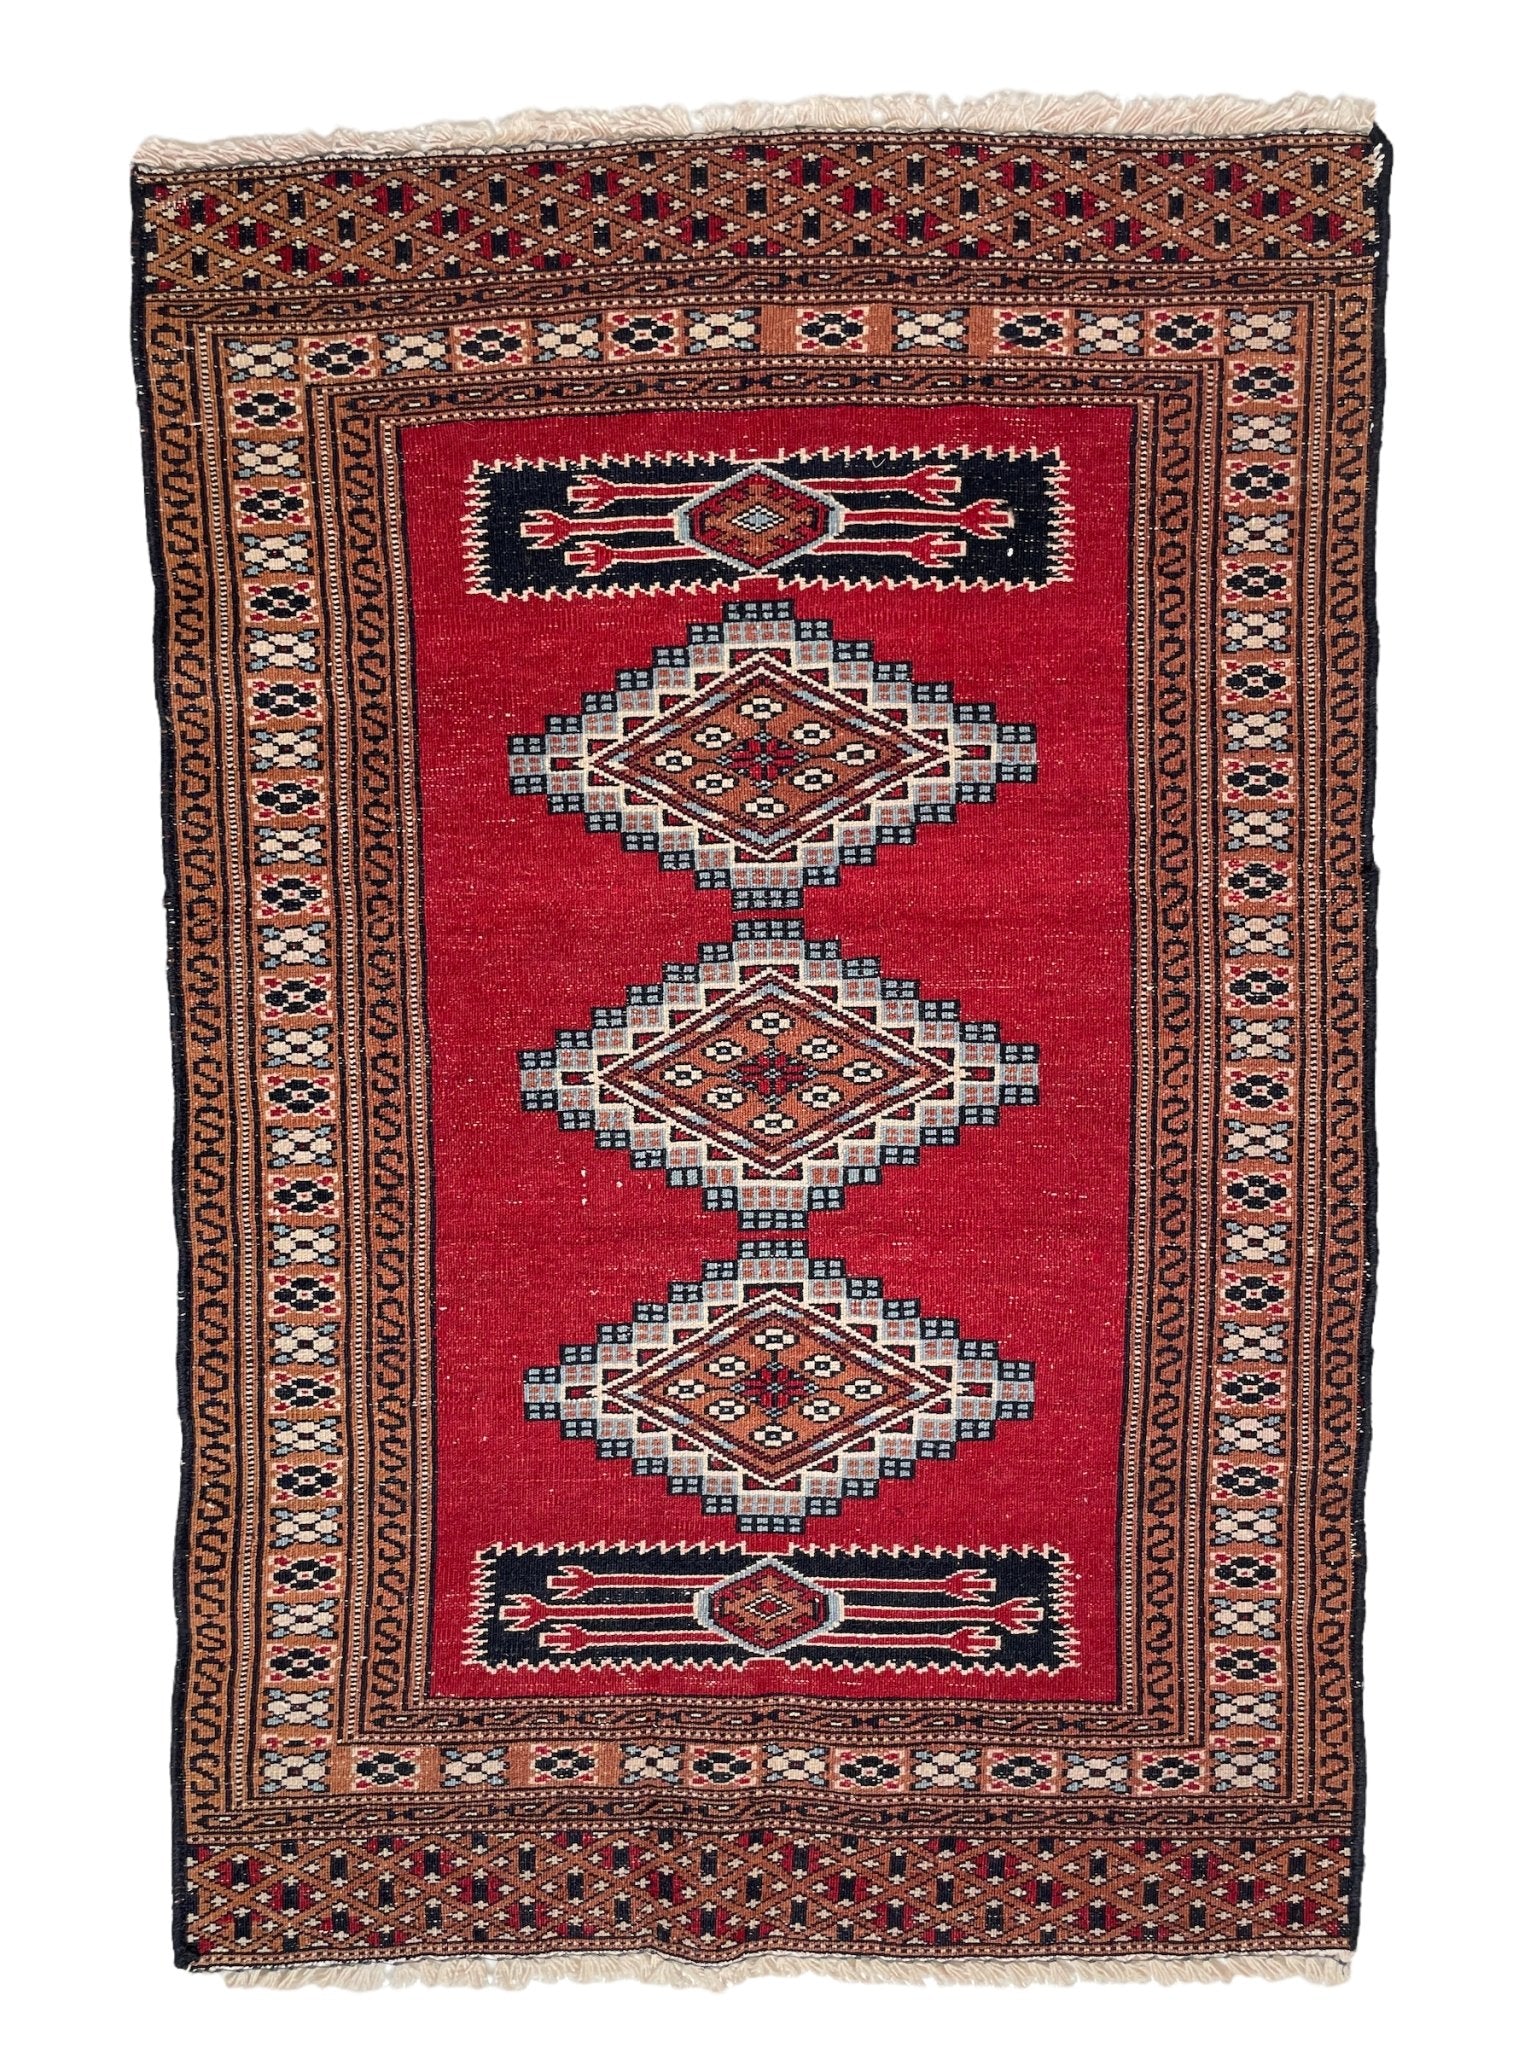 ISHQ 100% Wool Handmade Prayer Rug by Asrār Collection